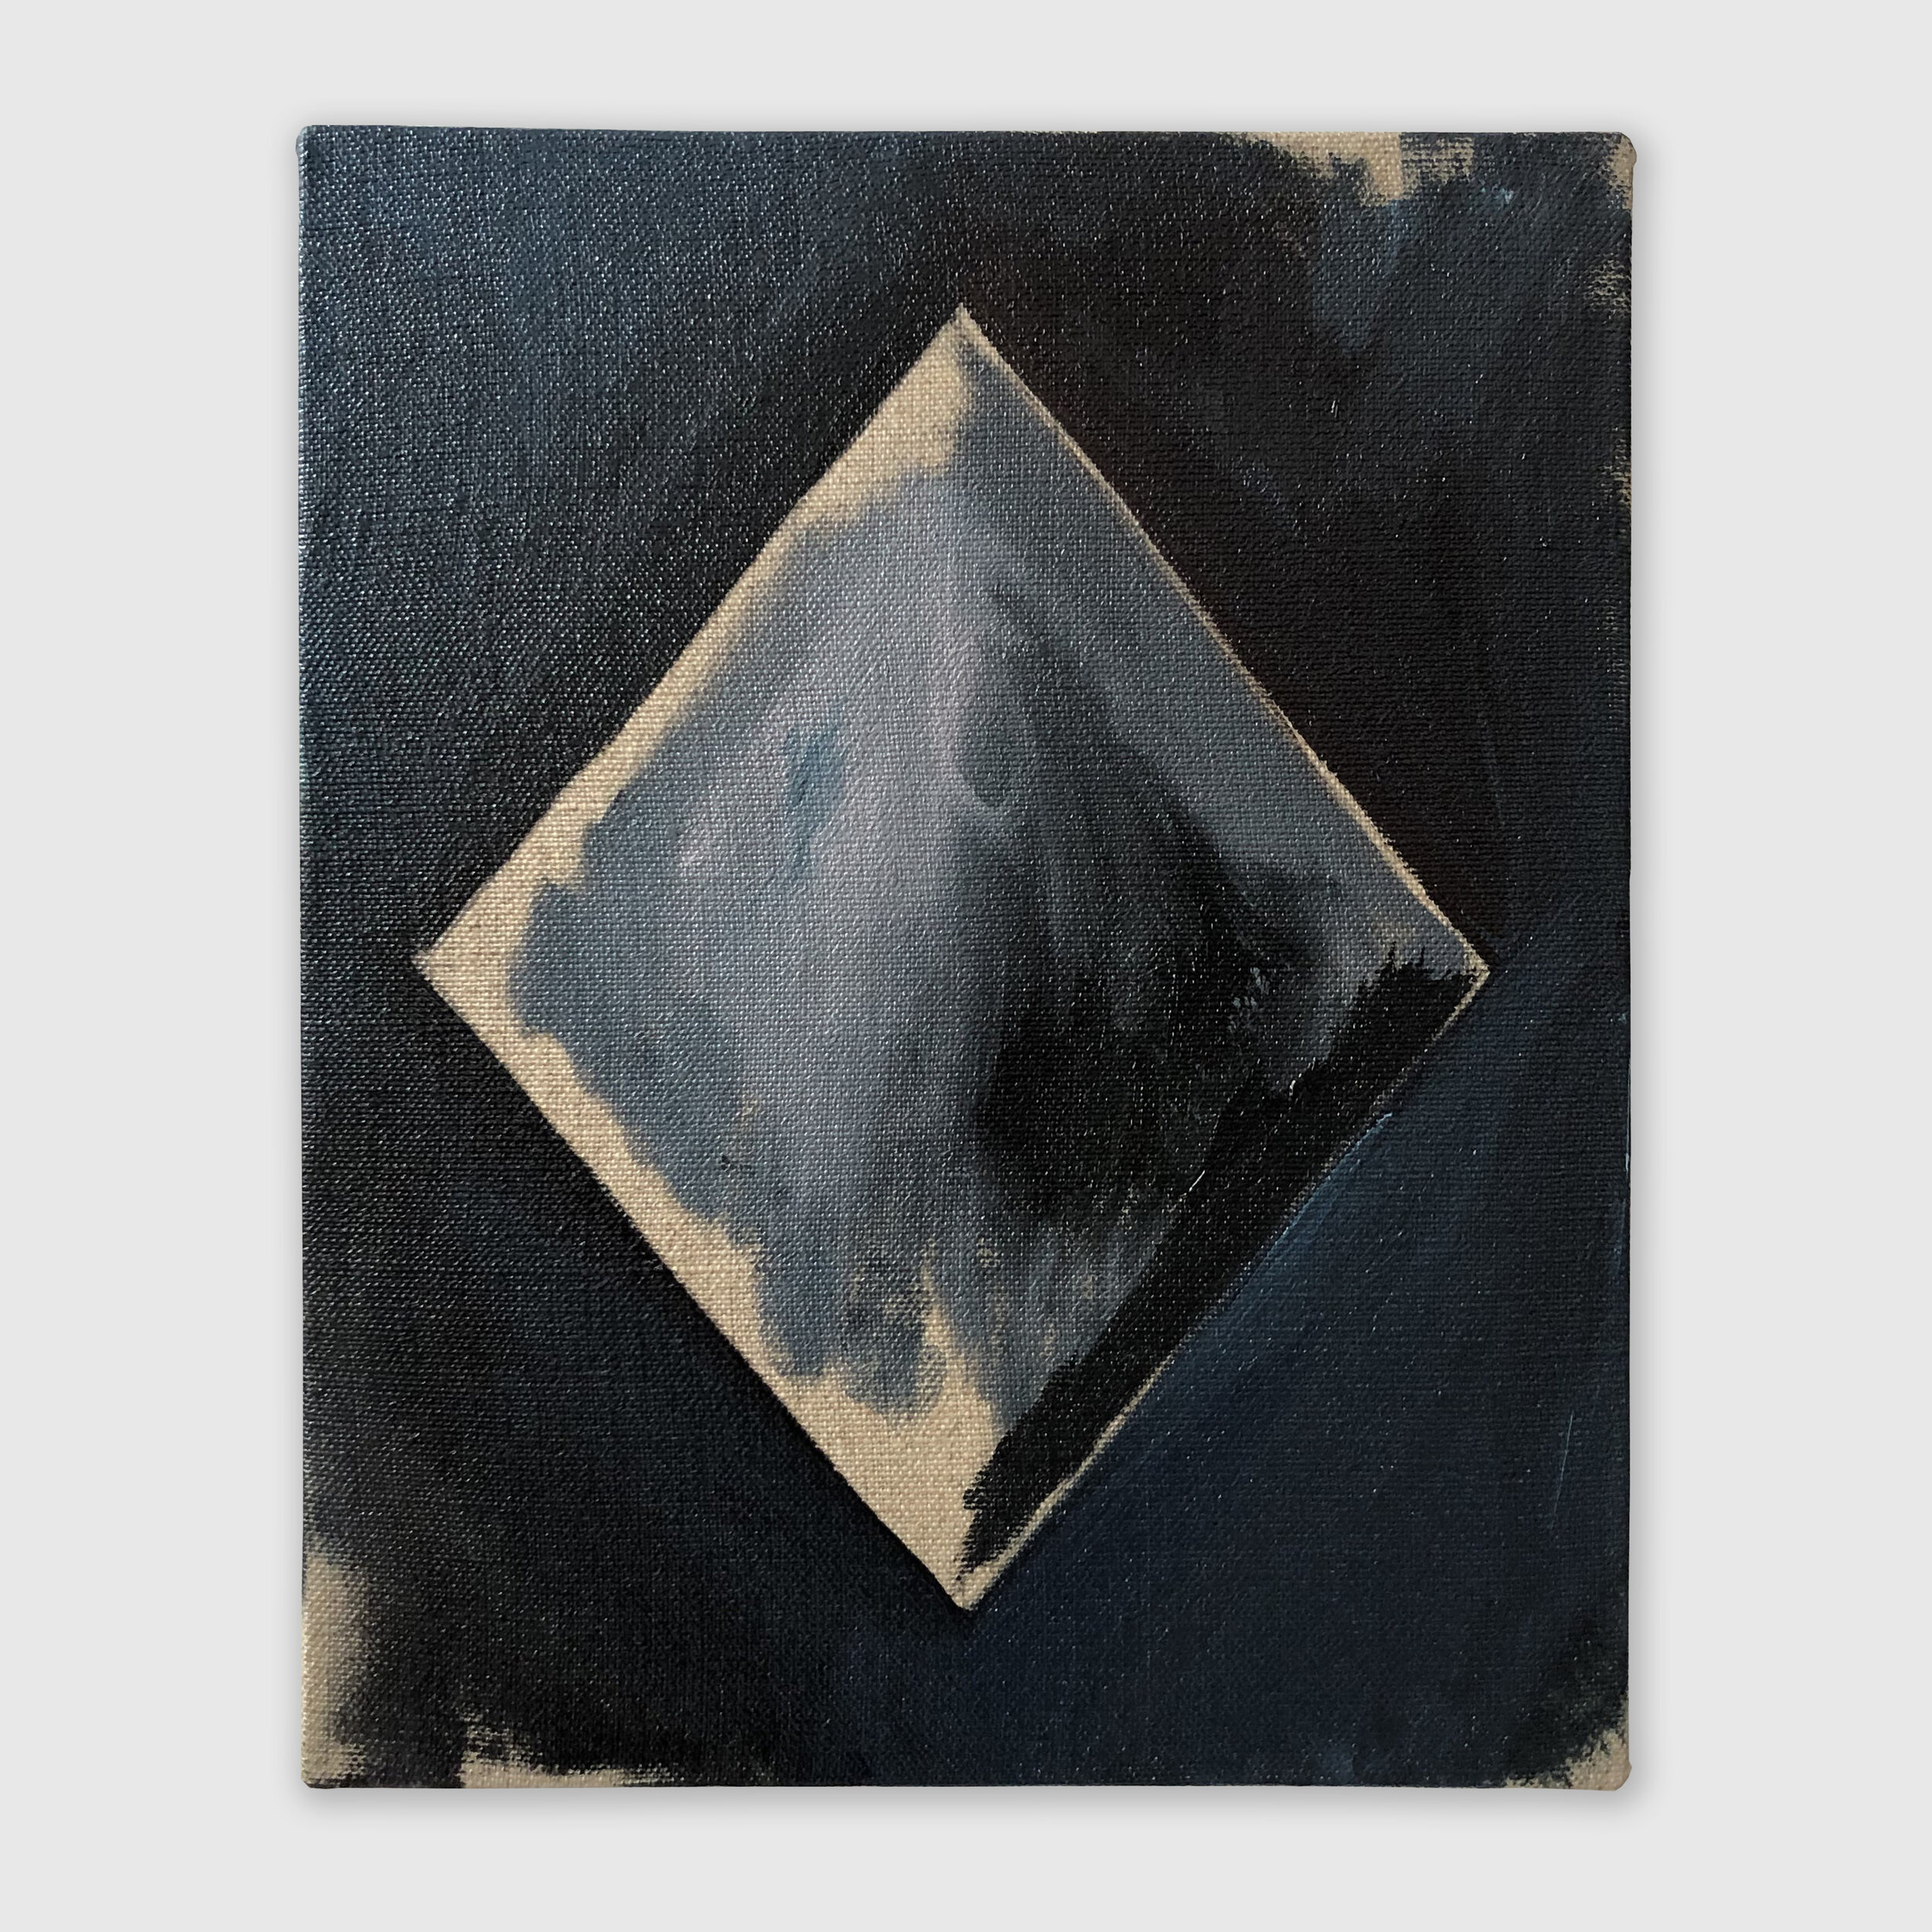 Untitled (Window 9), 2019 